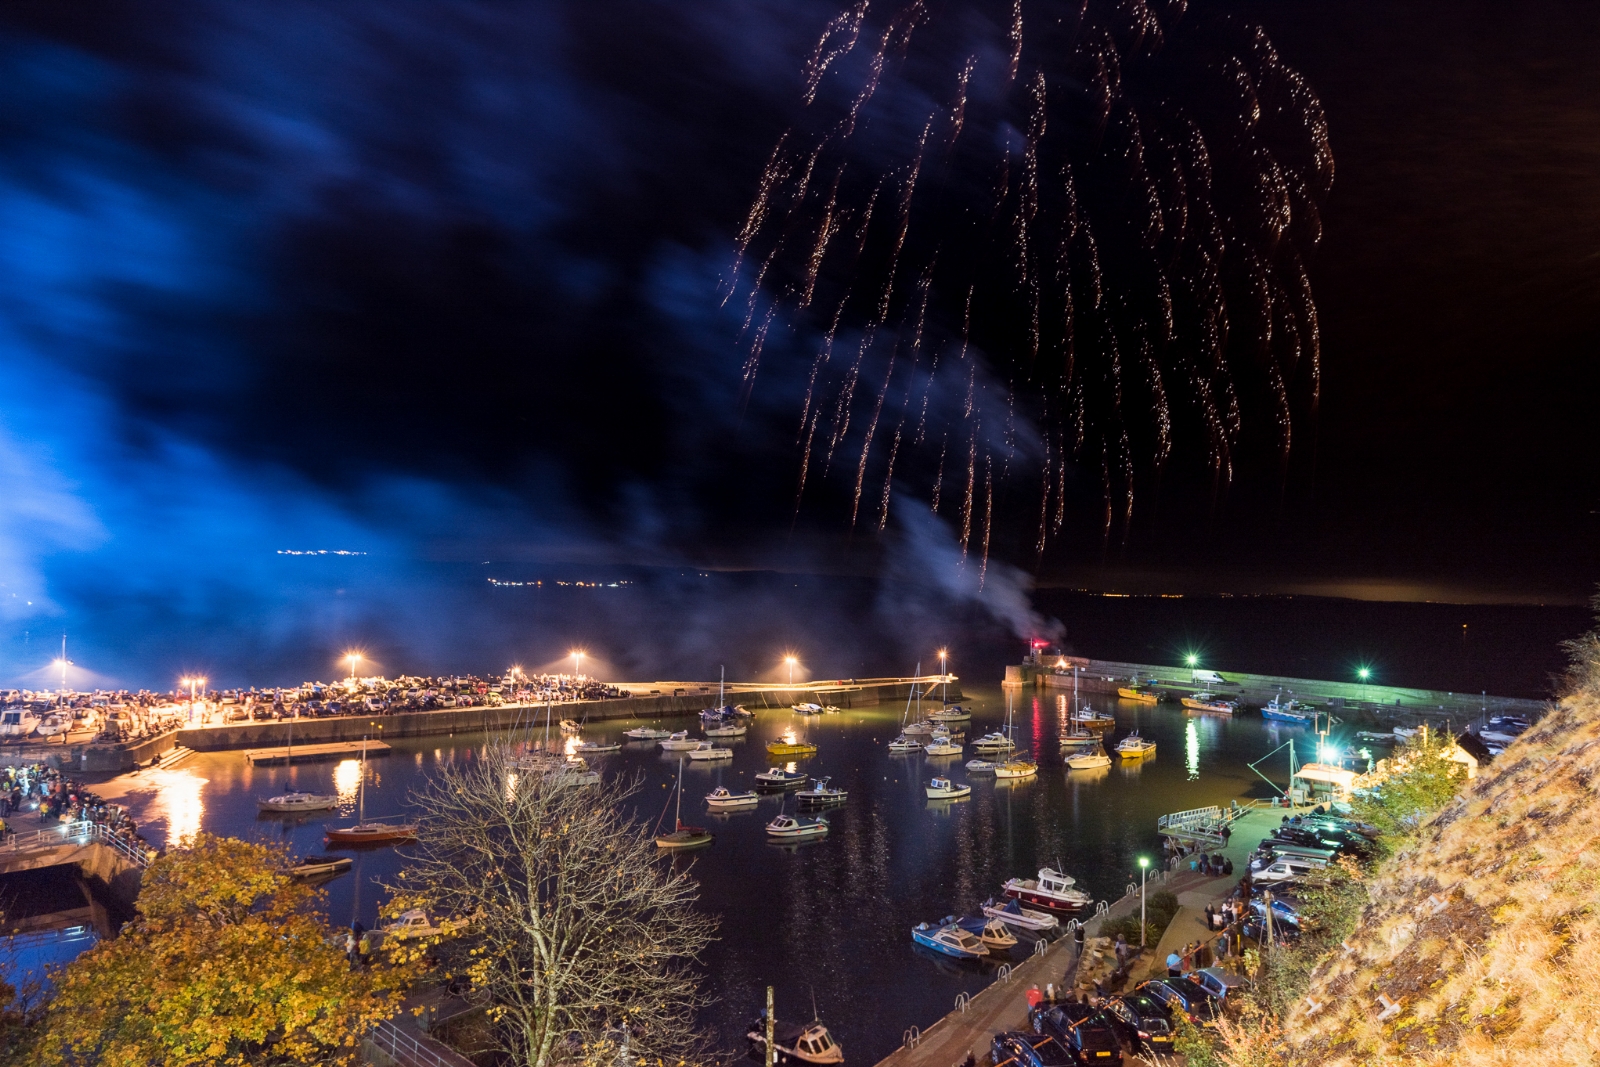 Image of Saundersfoot Fireworks by Mathew Browne